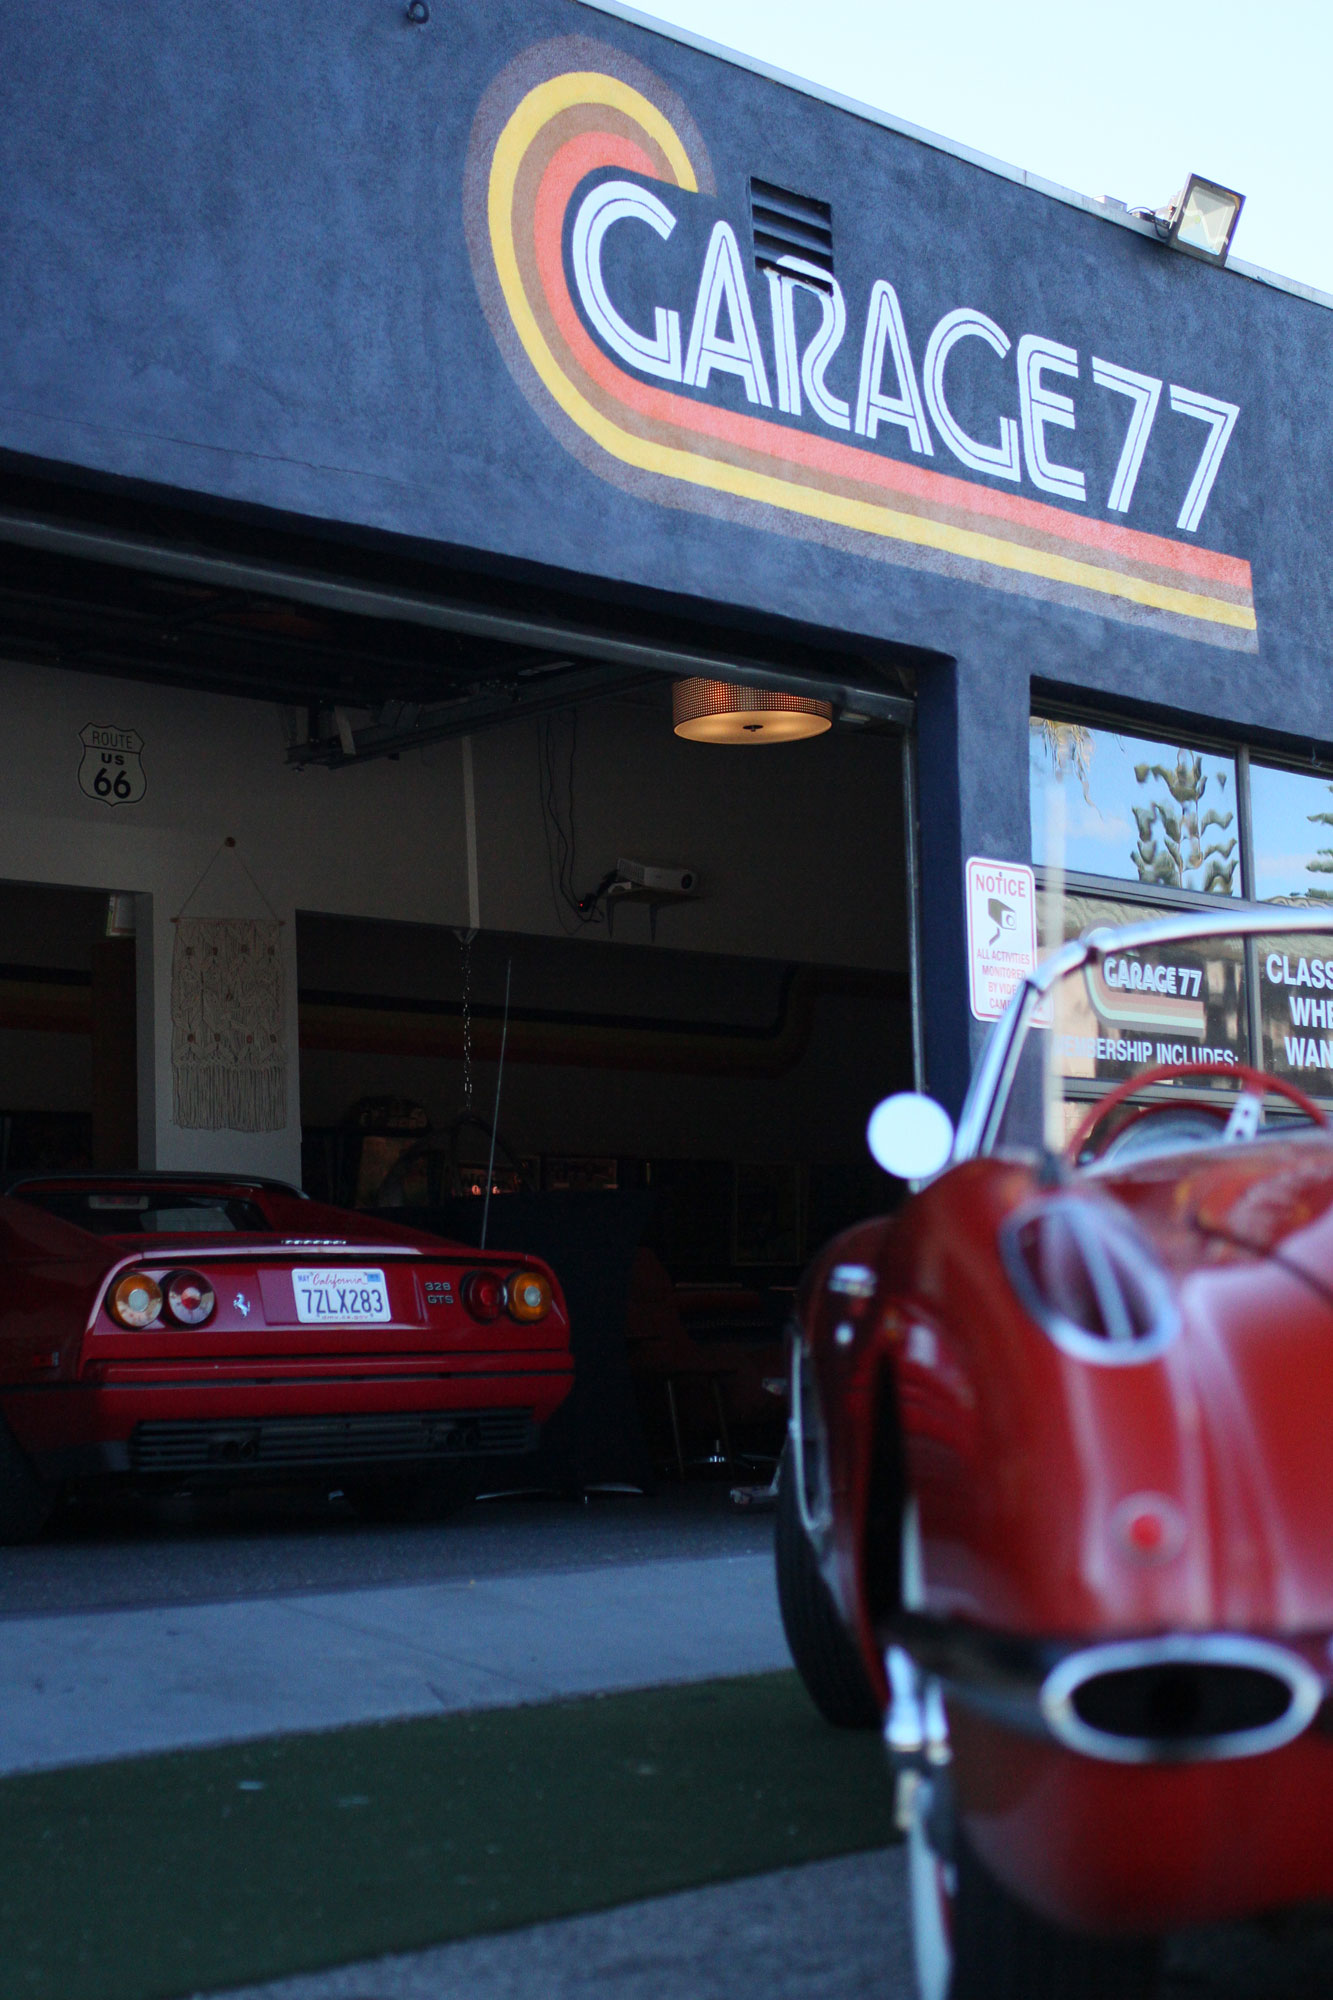 The red Ferrari 328 GTSi and the Corvette C1 inside and outside the Garage 77